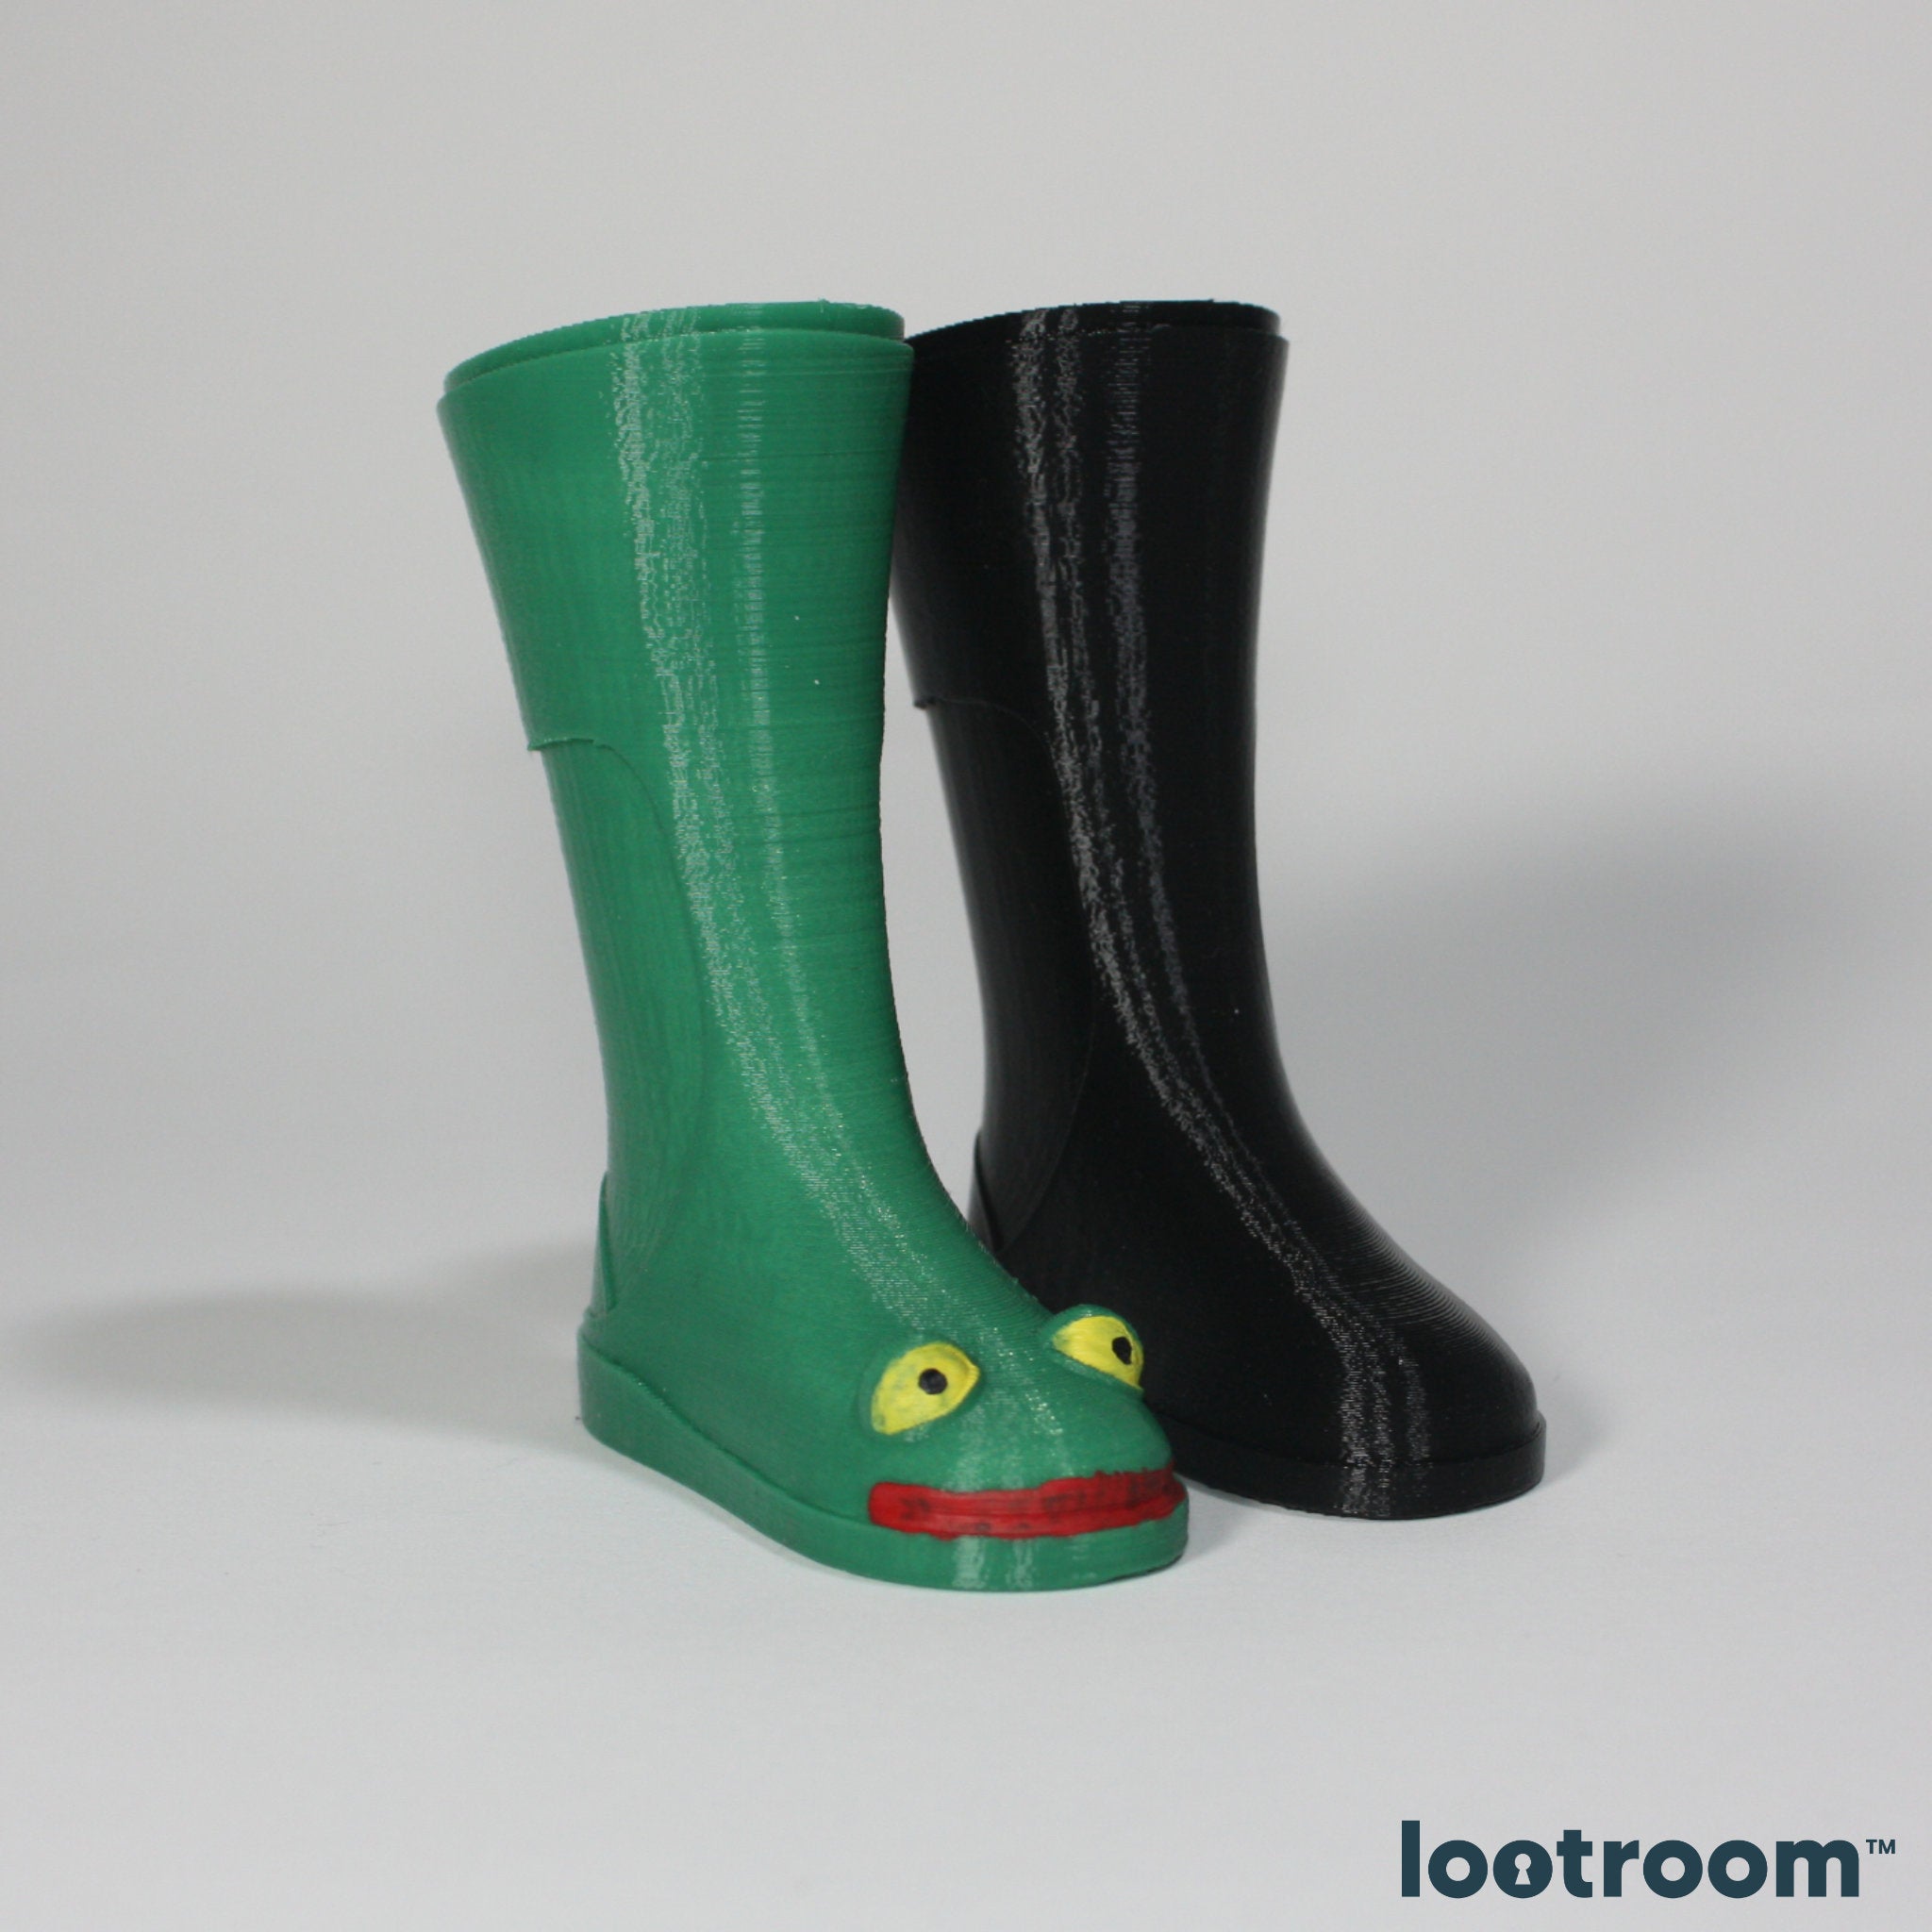 rust frog boot gamer gift cosplay prop